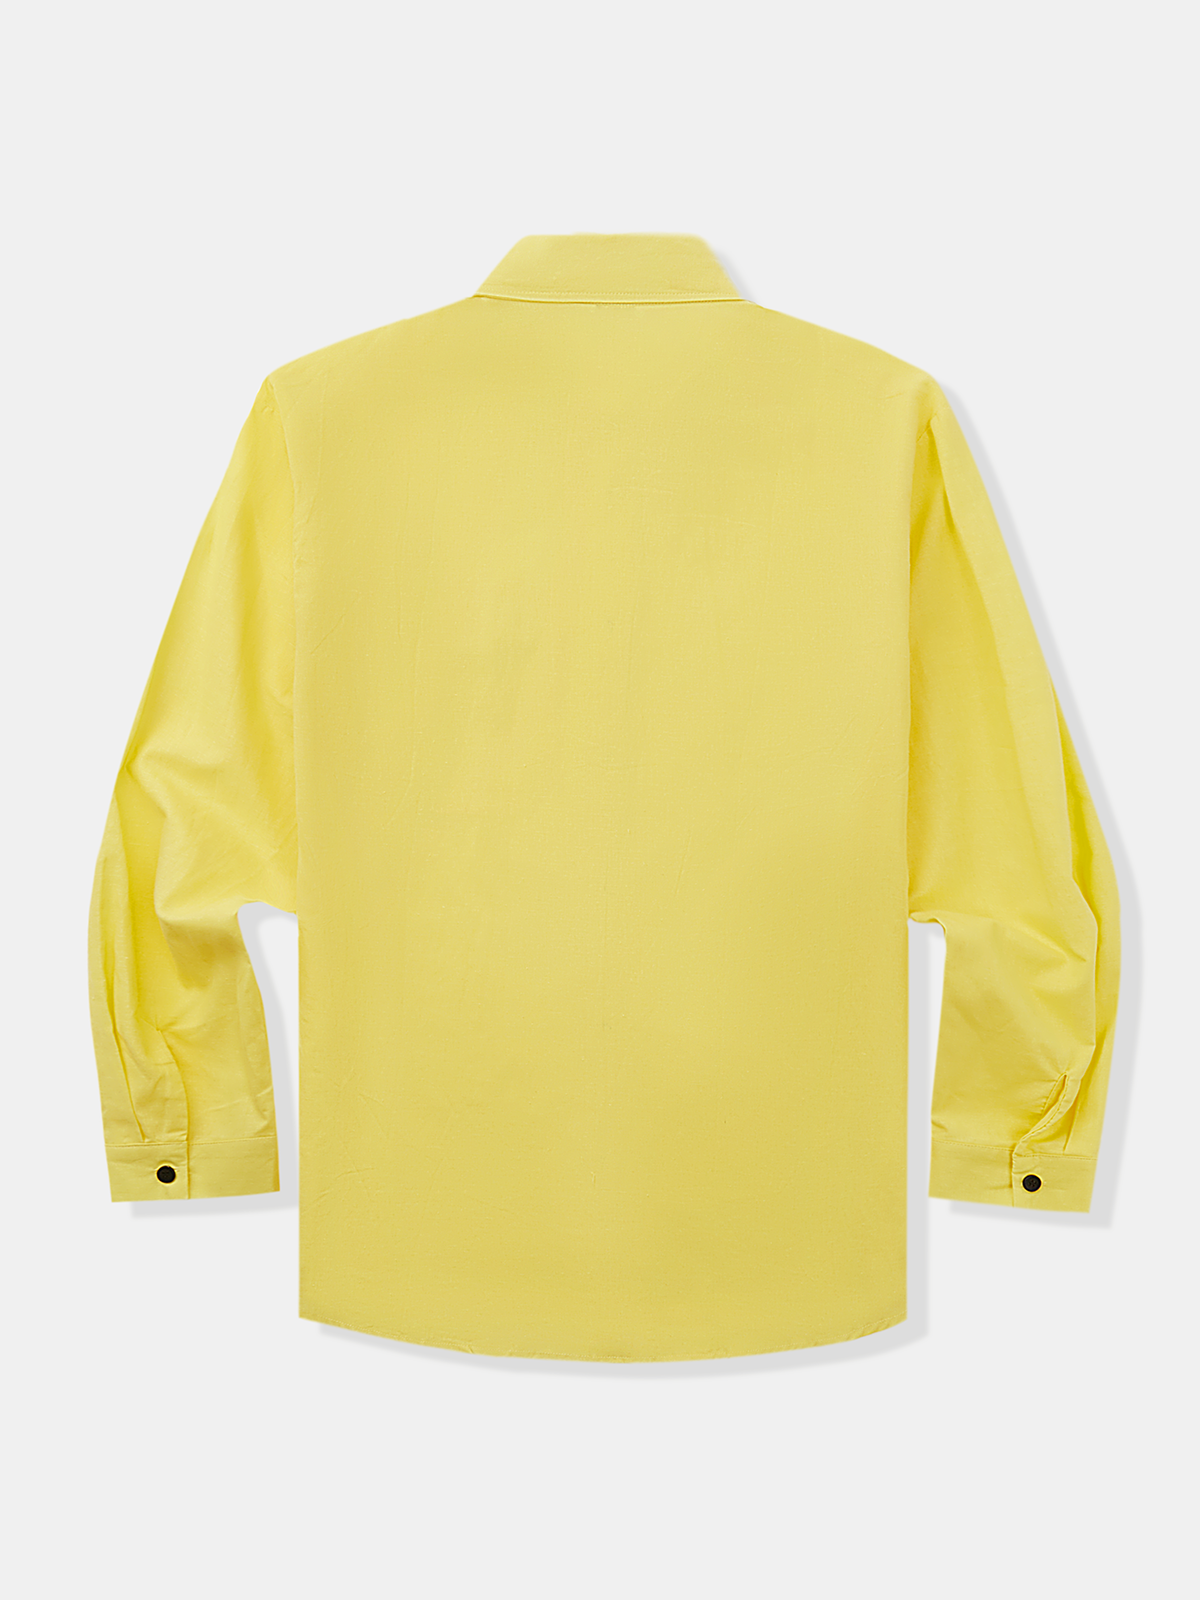 Hardaddy Cotton Plain Chest Pocket Long Sleeve Casual Shirt